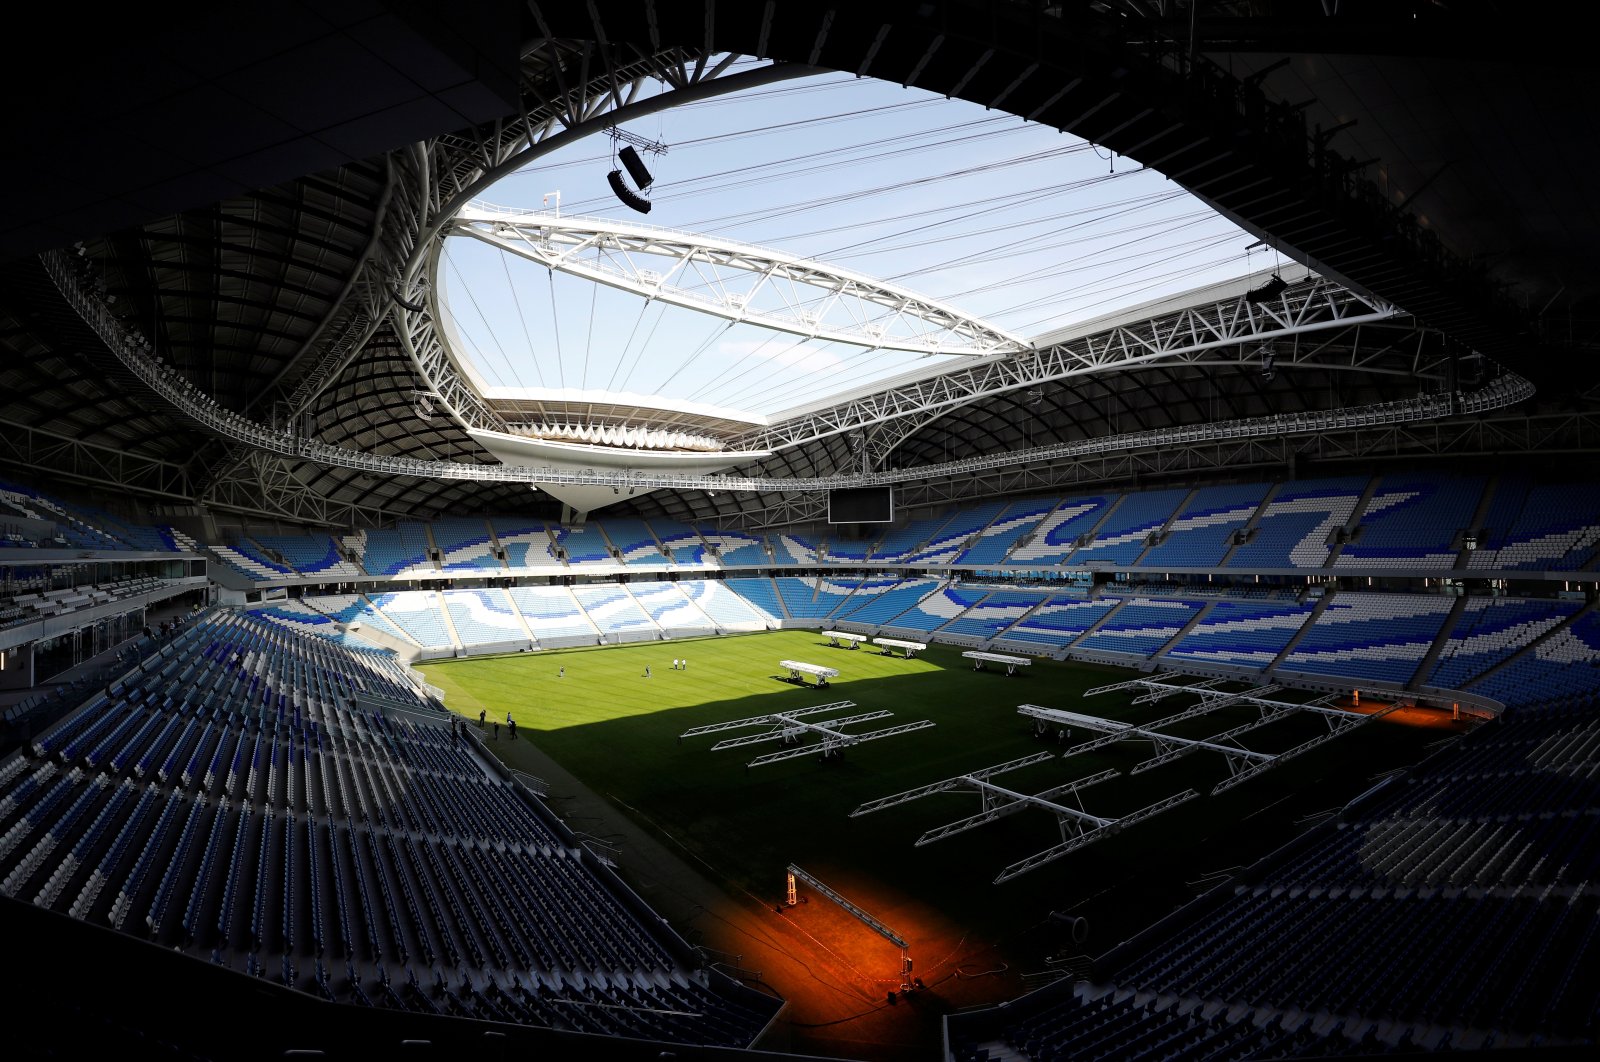 A general view of Al Janoub stadium built for the World Cup, in Al Wakrah, Qatar, Dec. 16, 2019. (REUTERS PHOTO)